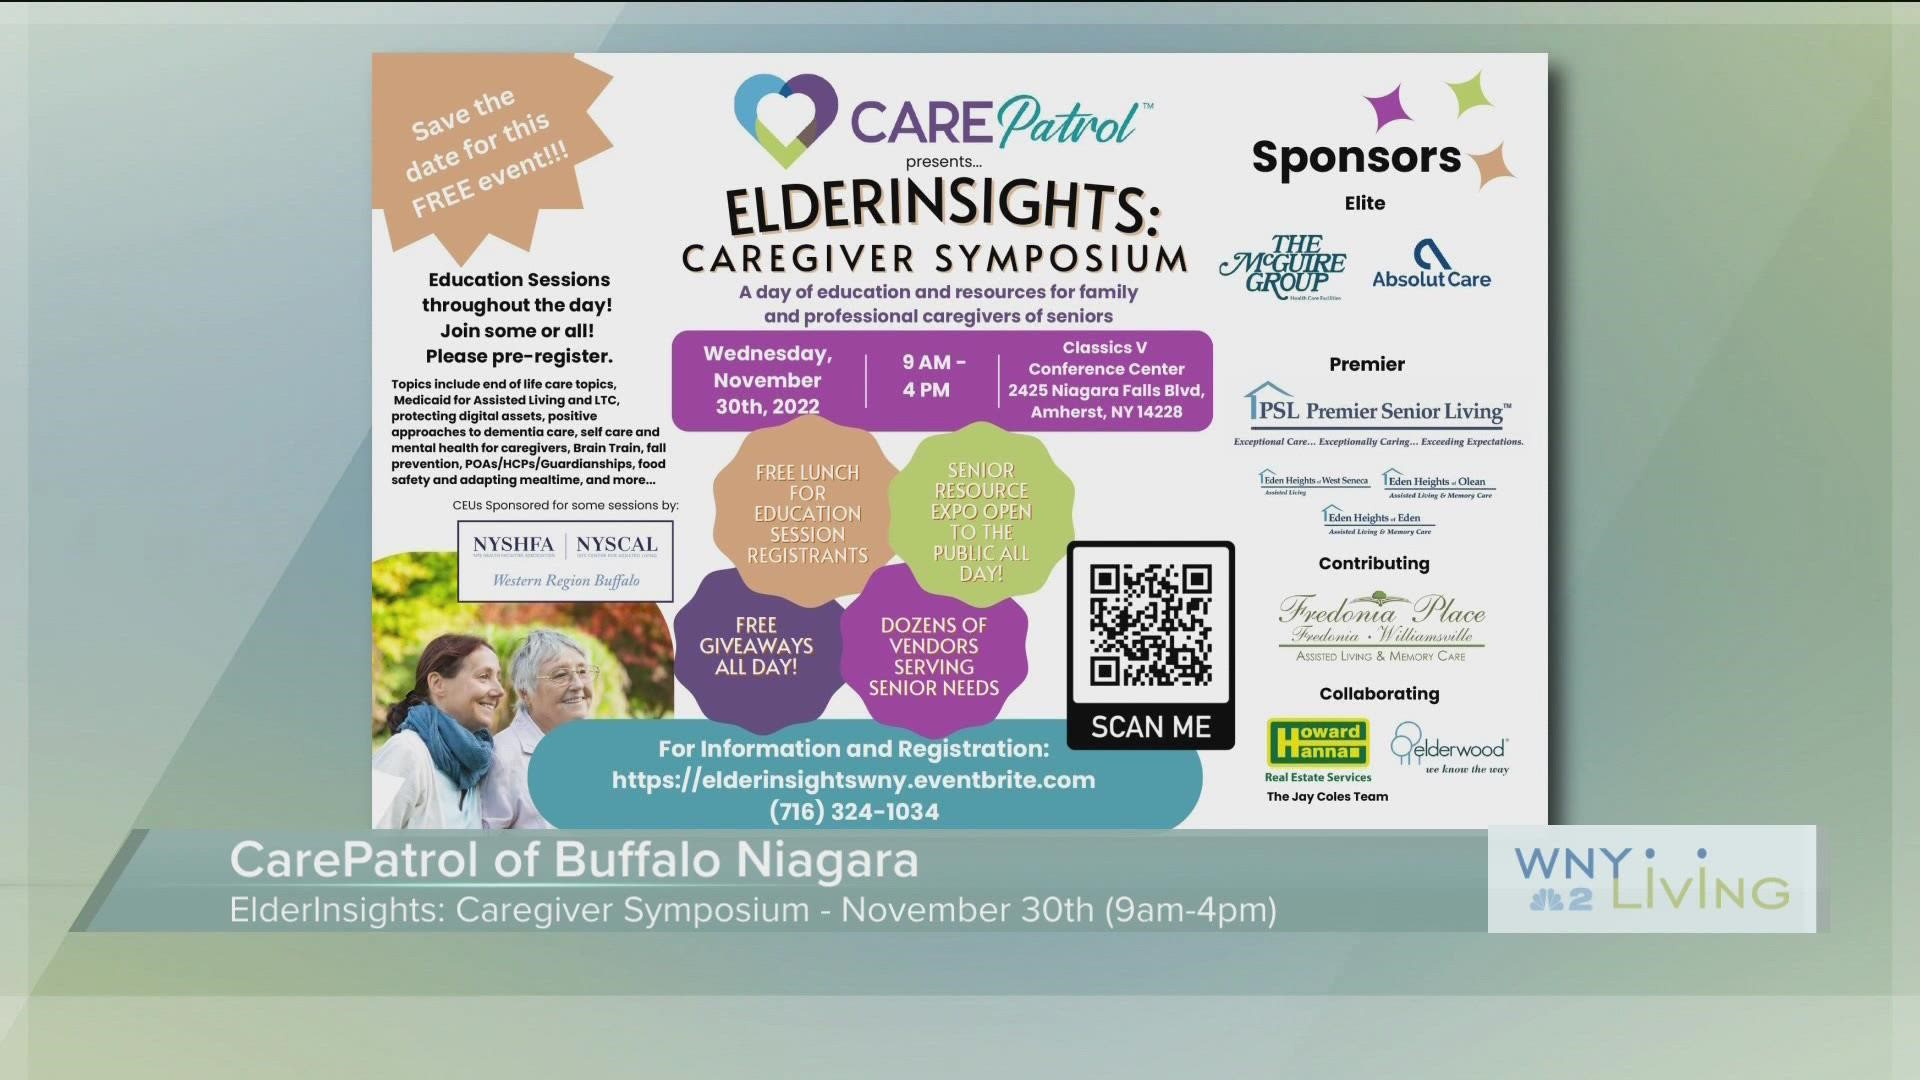 WNY Living - November 12 - CarePatrol of Buffalo Niagara (THIS VIDEO IS SPONSORED BY CAREPATROL OF BUFFALO NIAGARA)